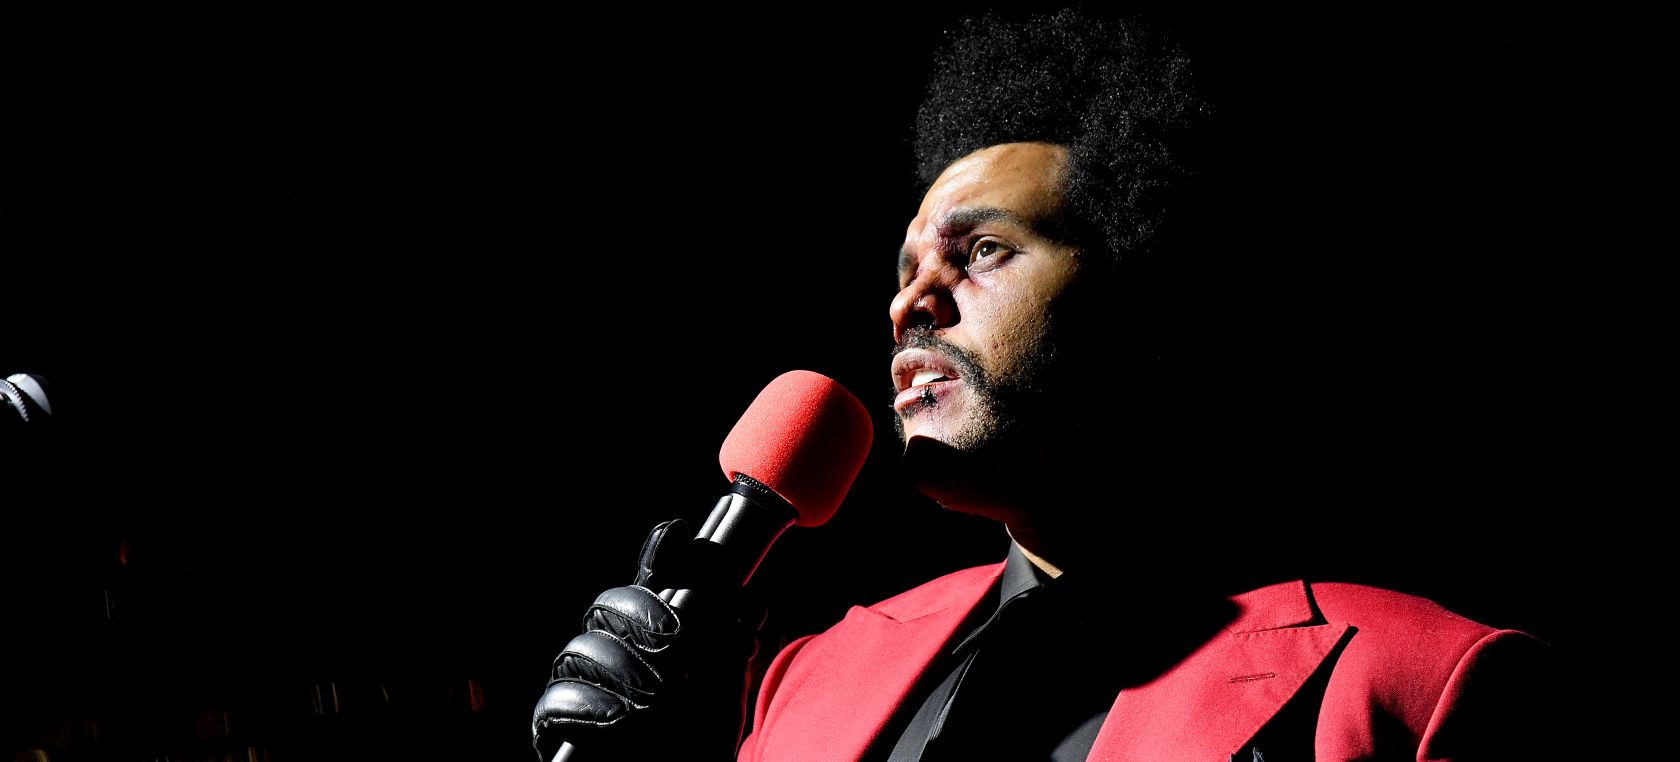 The Weeknd actuará en el intermedio de la Super Bowl 2021